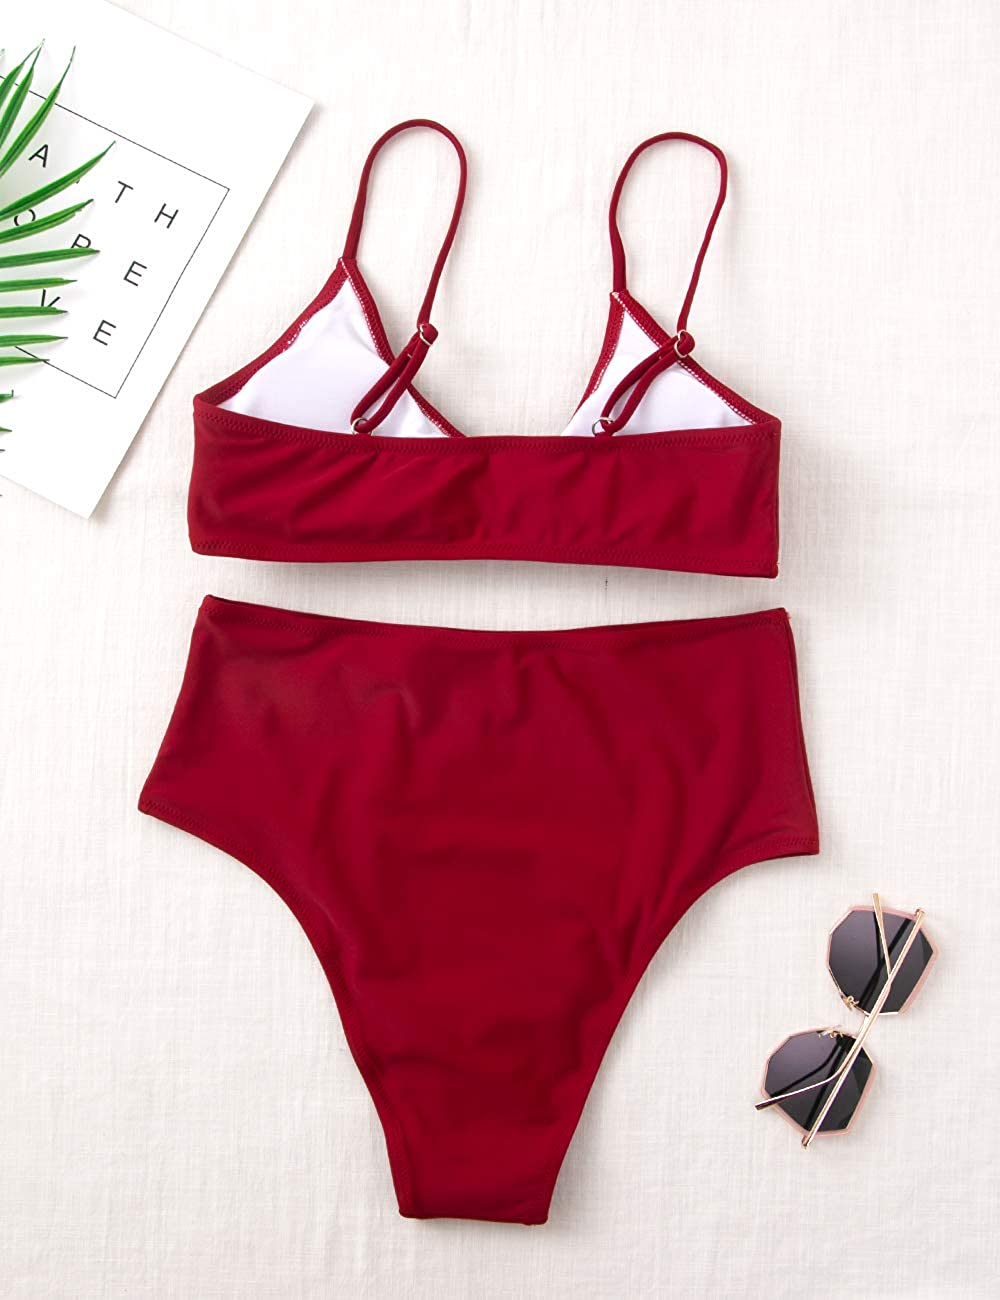 XUNYU High Waisted Bikini Set for Women Swimsuits Push Up Tie, Red ...